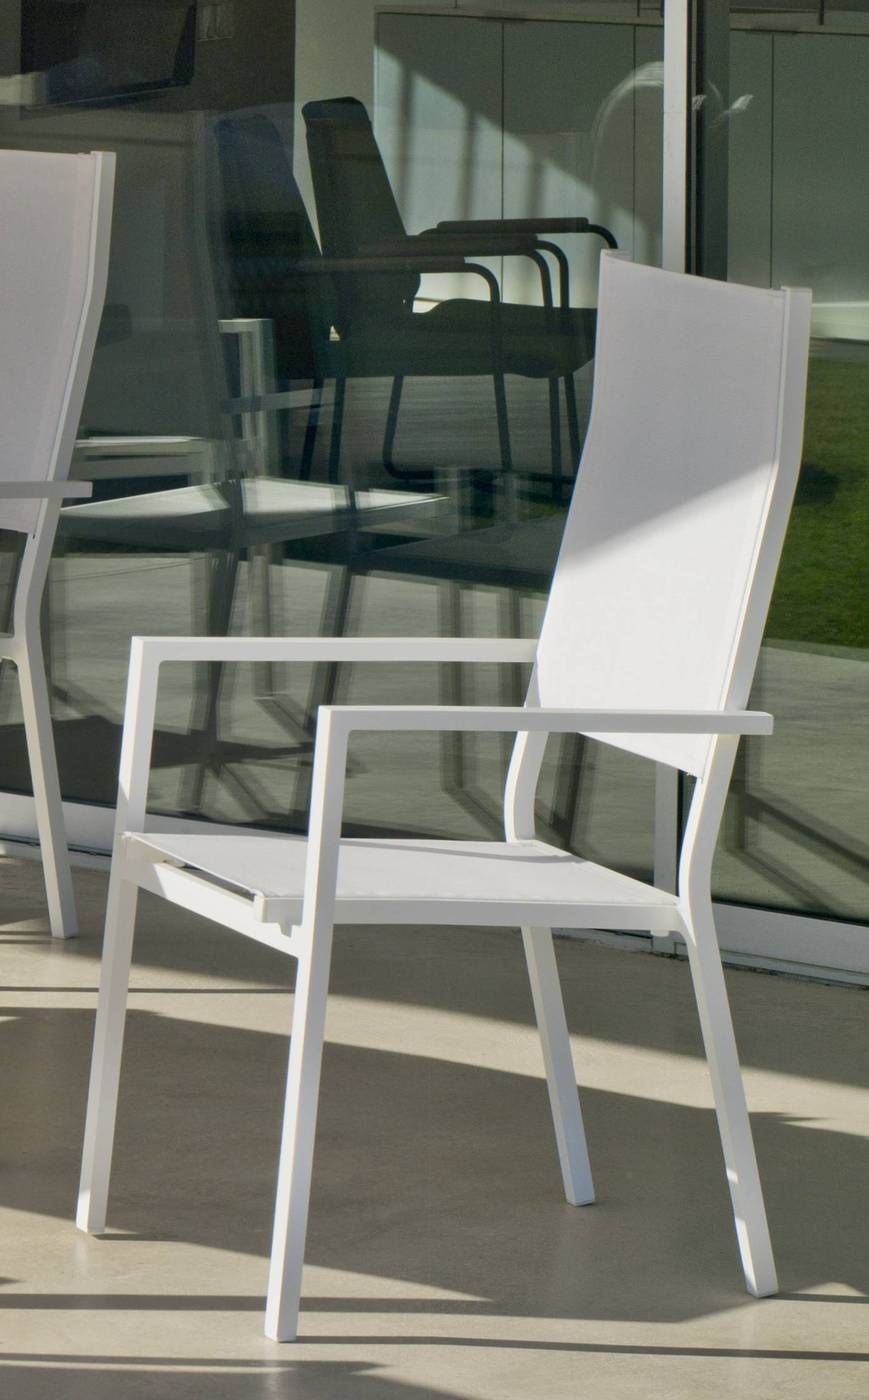 Set Lomba-80-4 Janeiro - Conjunto de aluminio color marrón: Mesa cuadrada con tablero mosaico de 80 cm + 4 sillones altos de textilen.